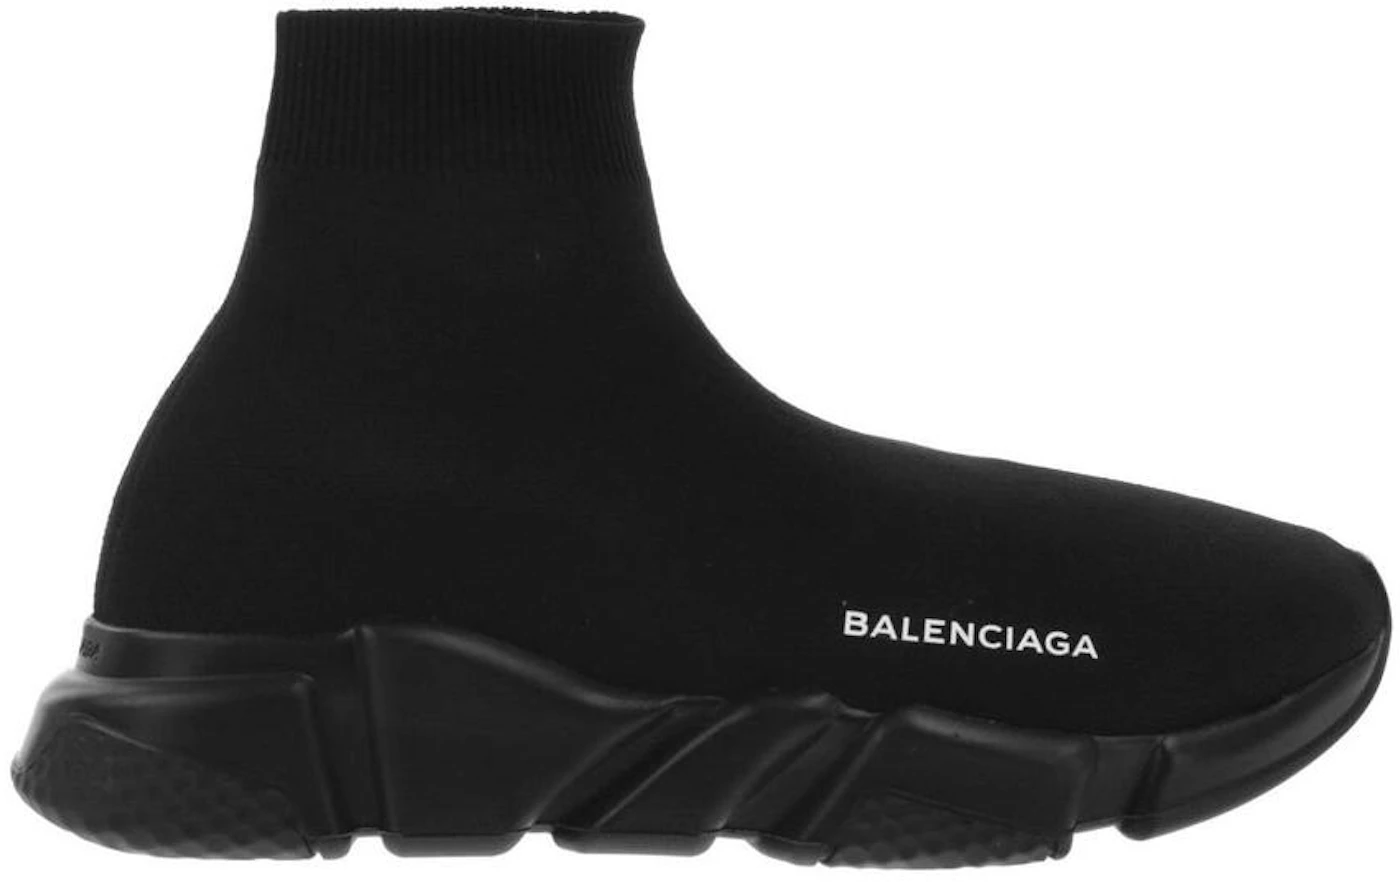 Balenciaga Speed Trainer Triple Black Men's - 485625W05G01000 - US